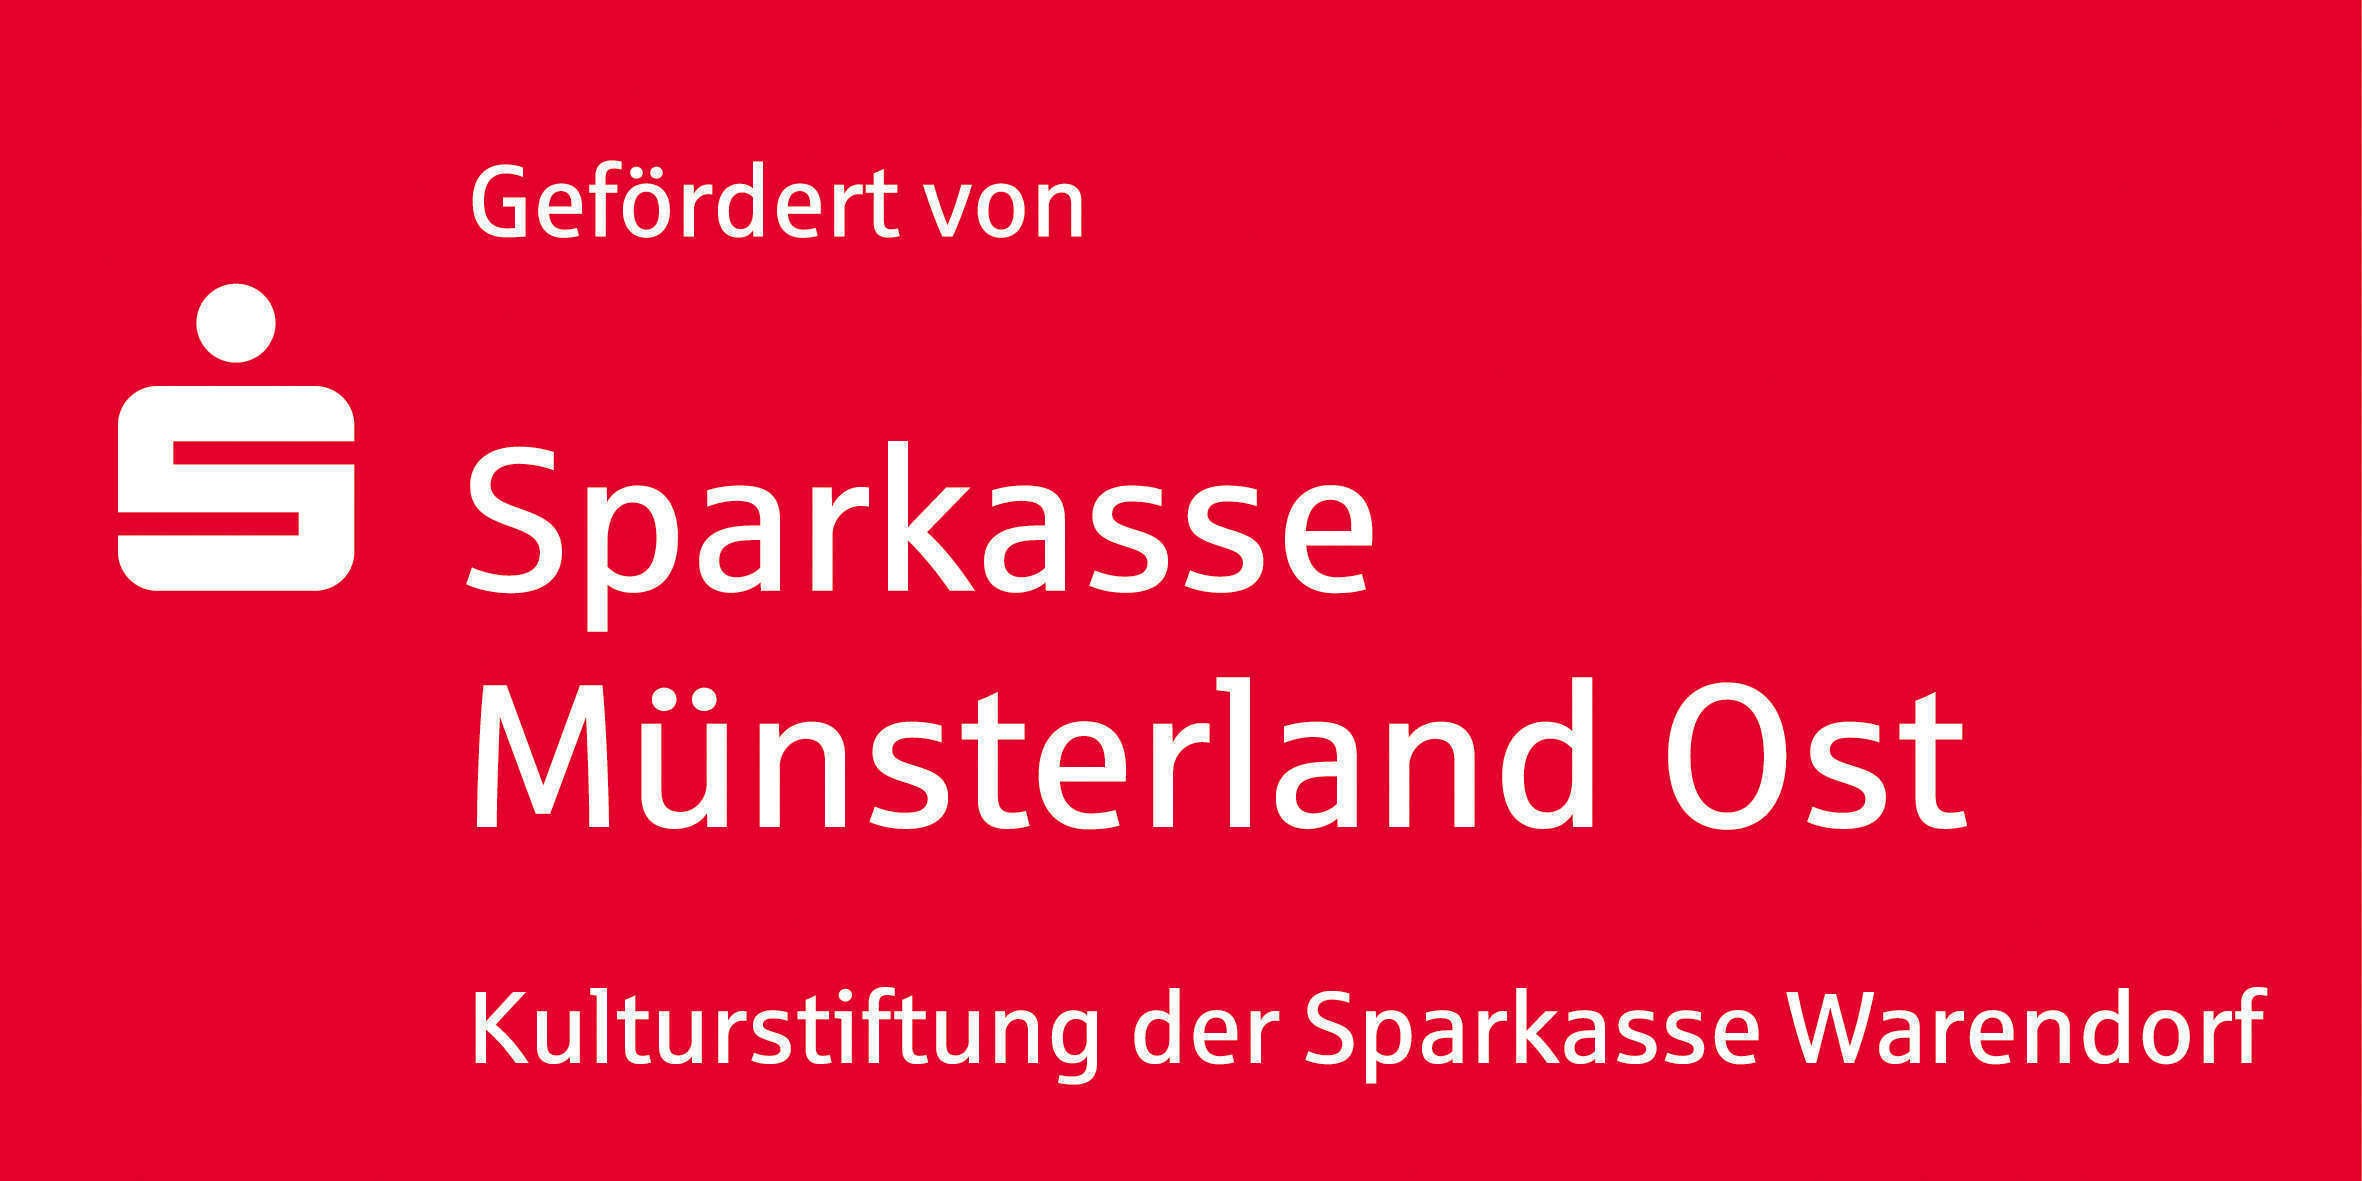 2017 Logo Kulturstiftung der Sparkasse Mu nsterland Ost